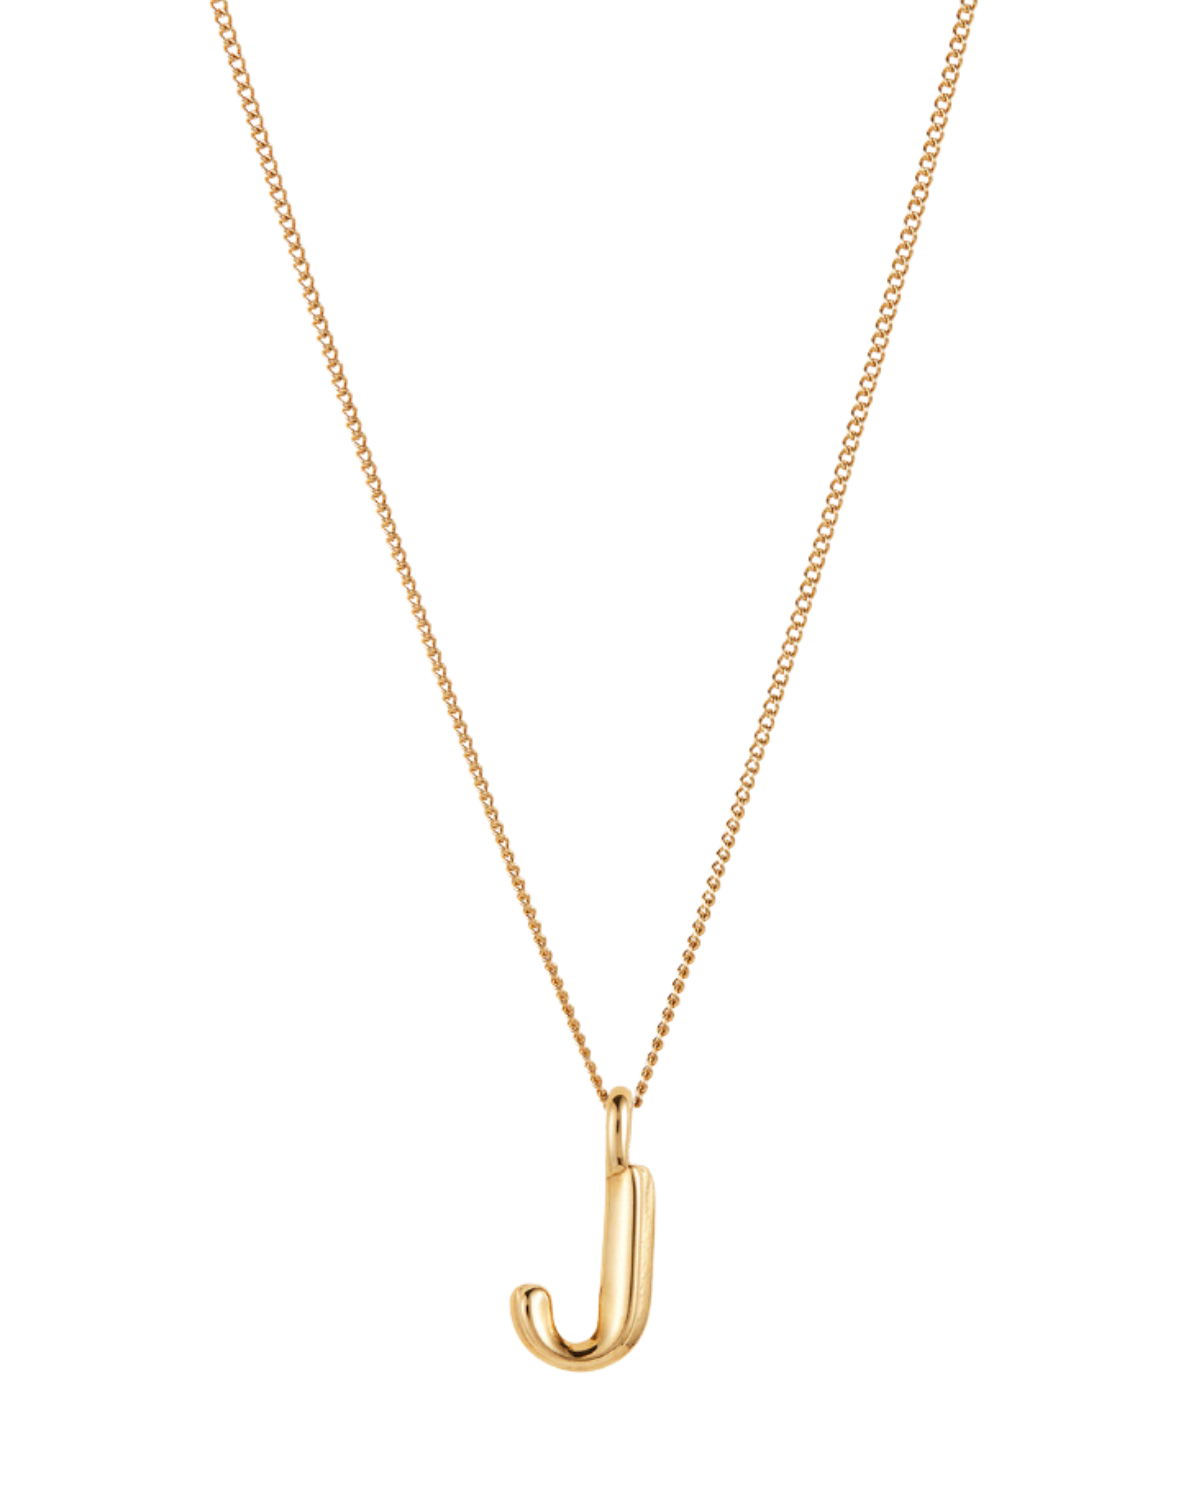 Monogram Necklace - J (Gold)